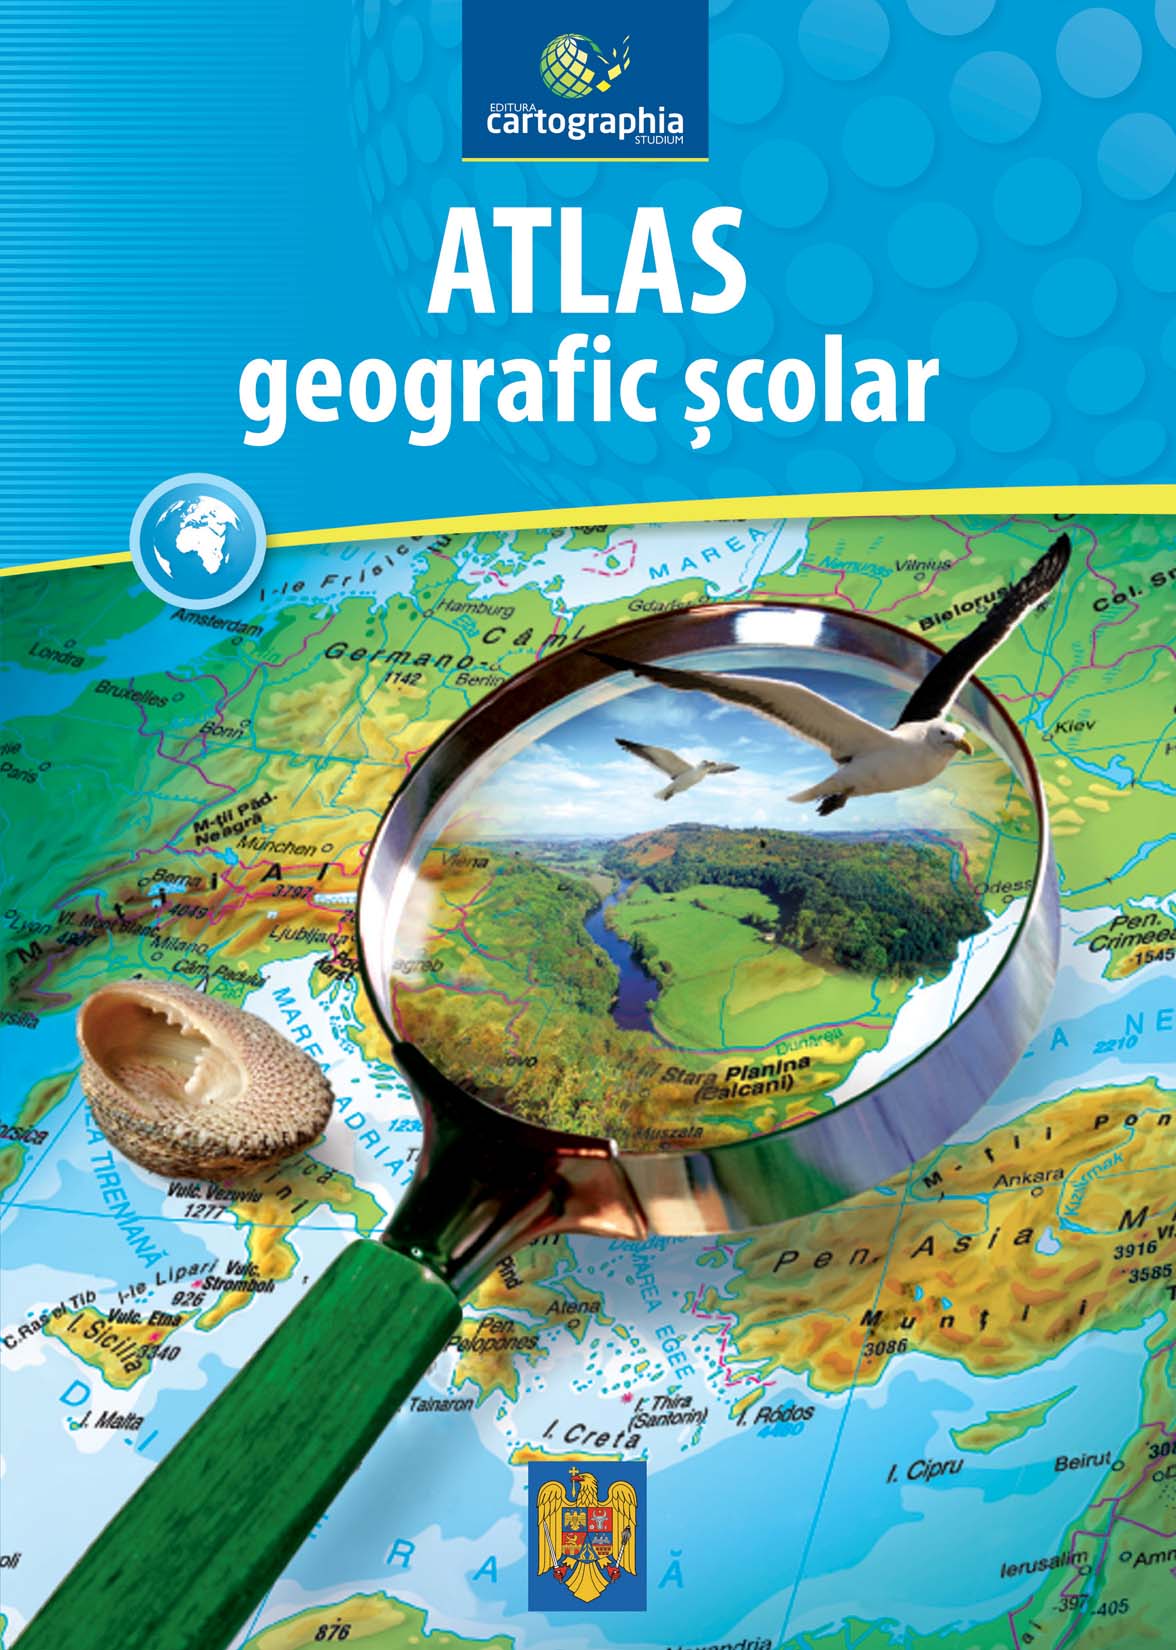 Atlas geografic scolar | Cartographia Carte